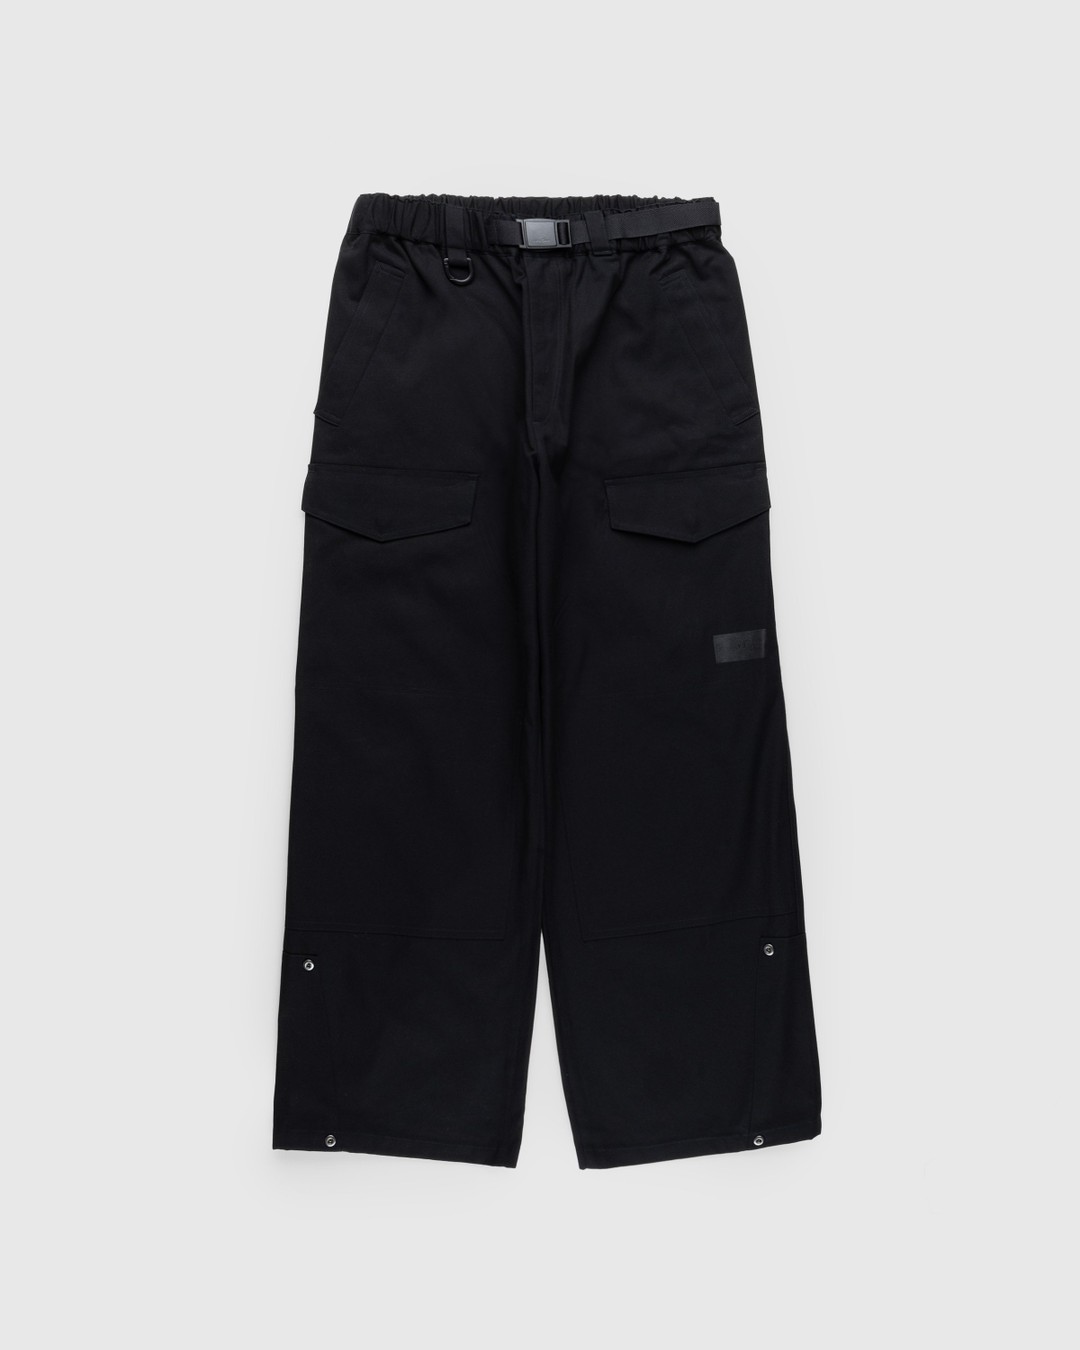 Y-3 – GFX Workwear Pants Black - Pants - Black - Image 1